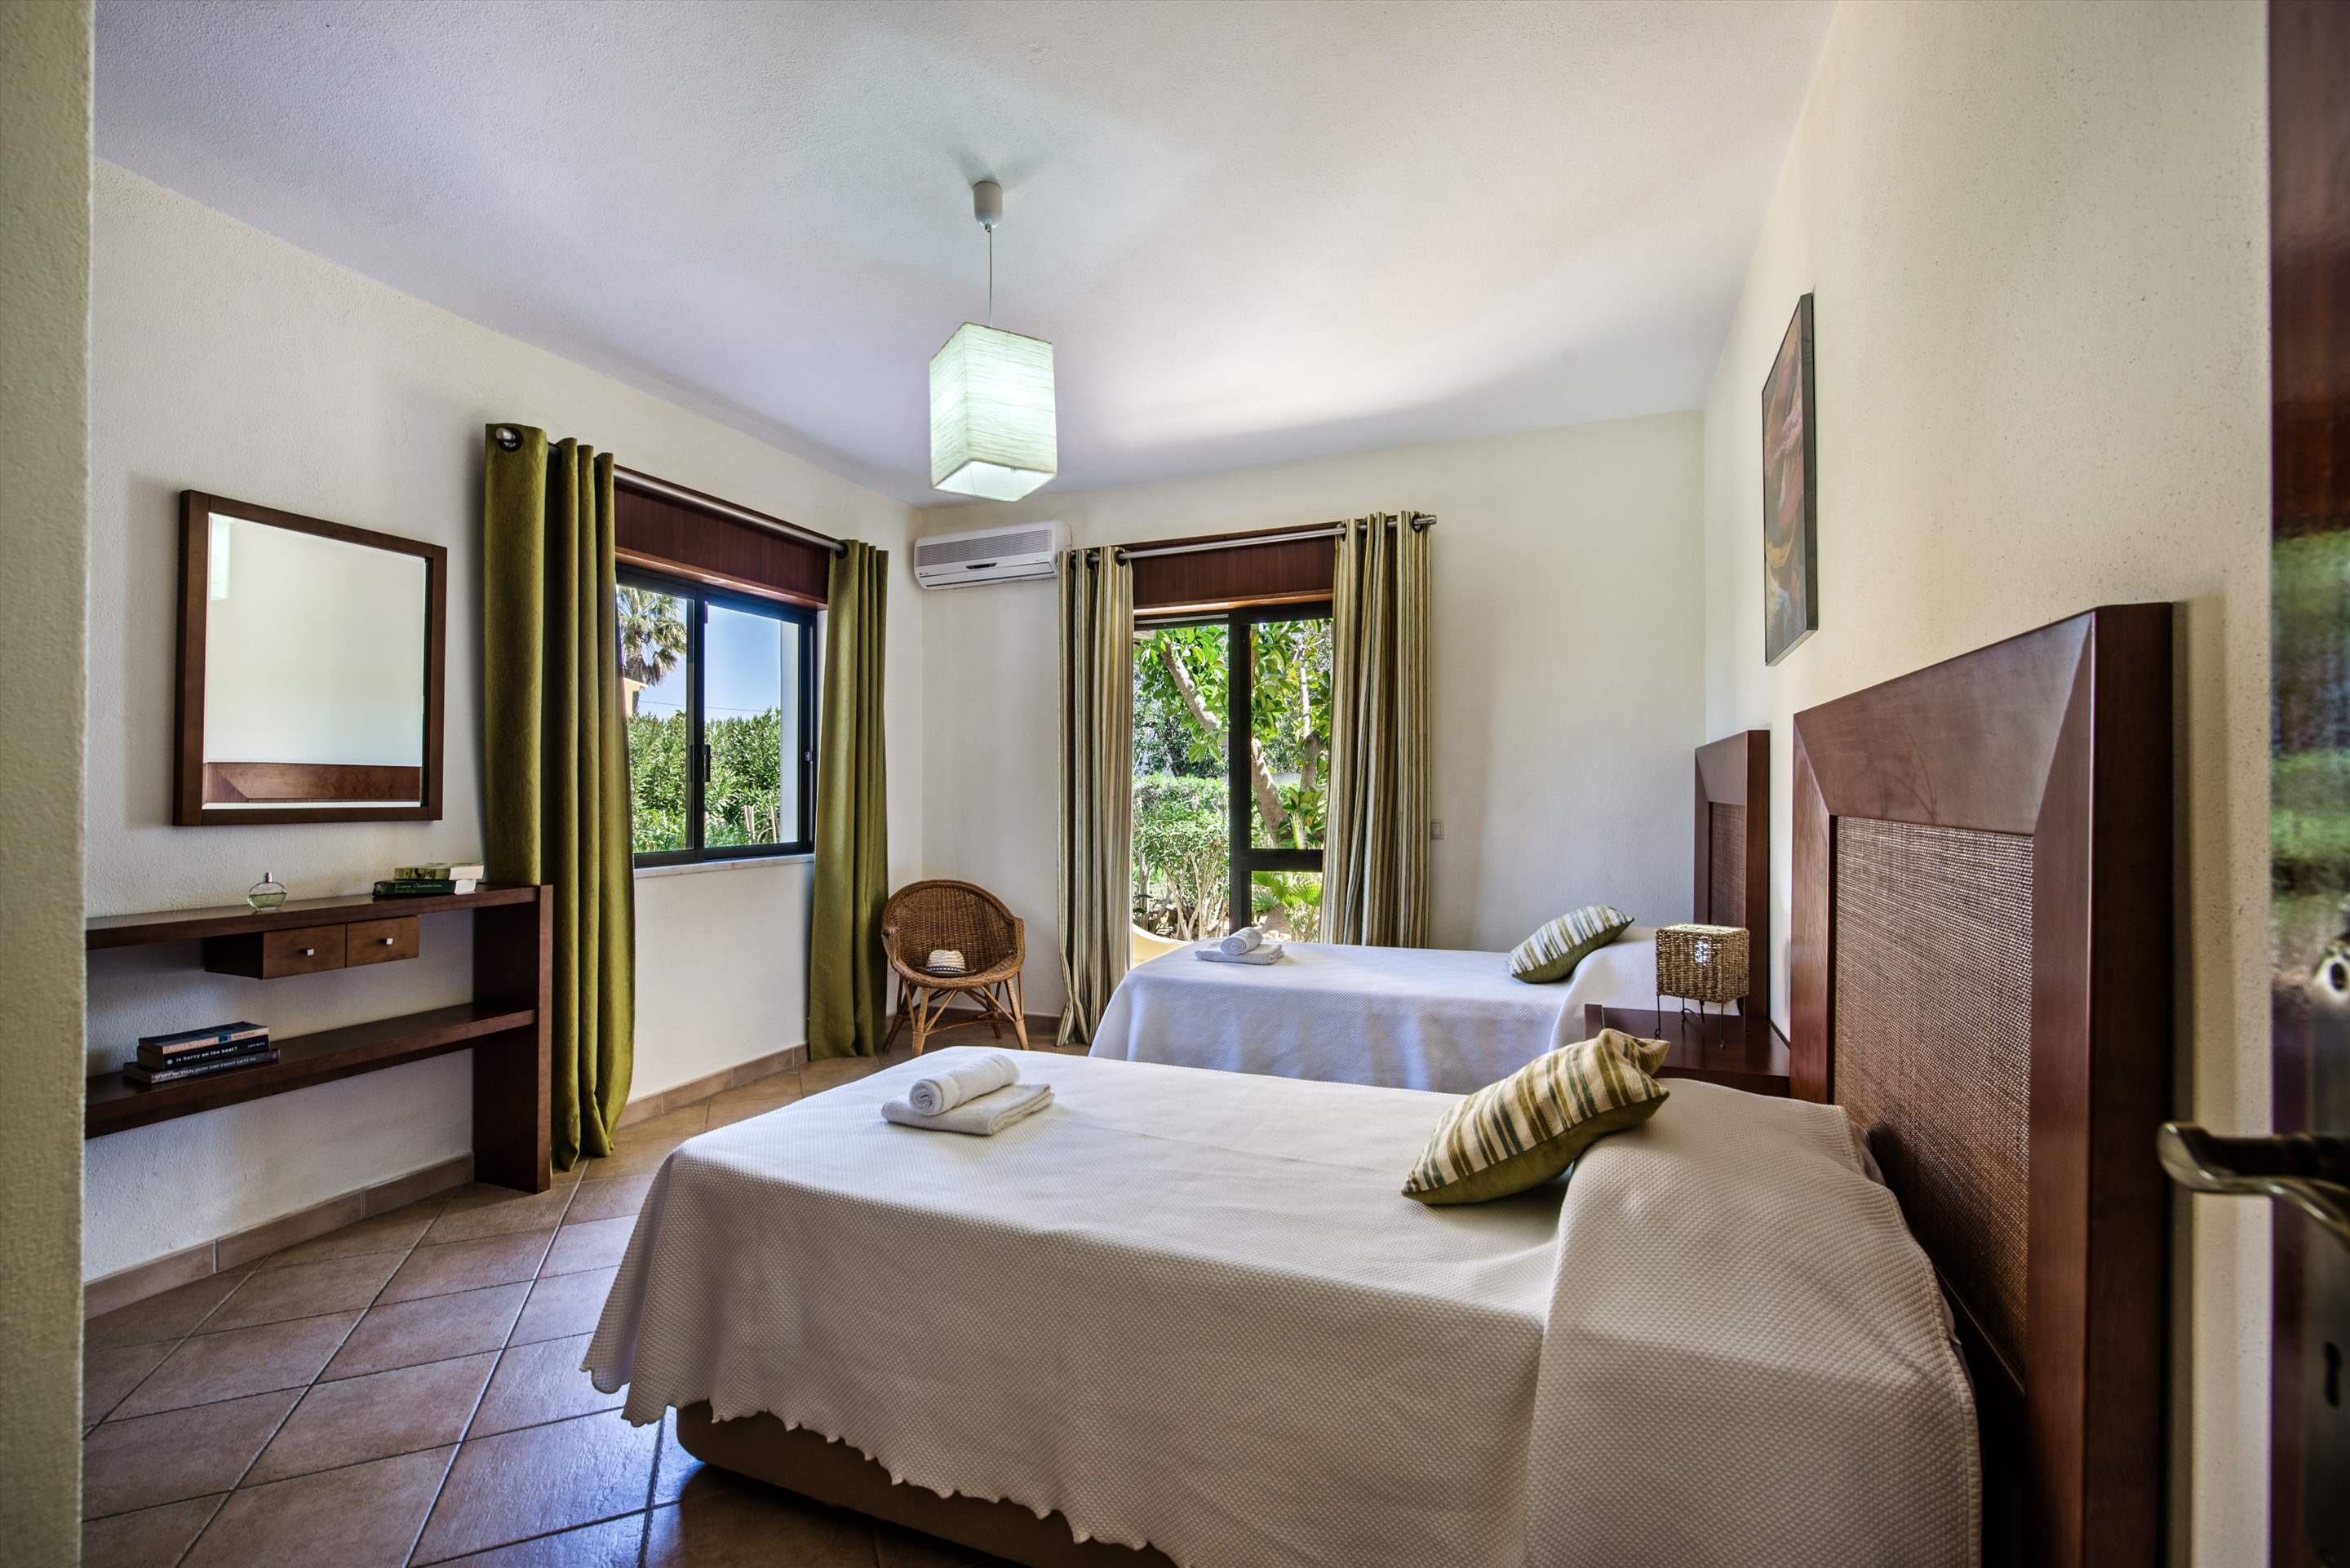 Villa Amendoeira, 7 to 8 persons rate, 4 bedroom villa in Gale, Vale da Parra and Guia, Algarve Photo #18